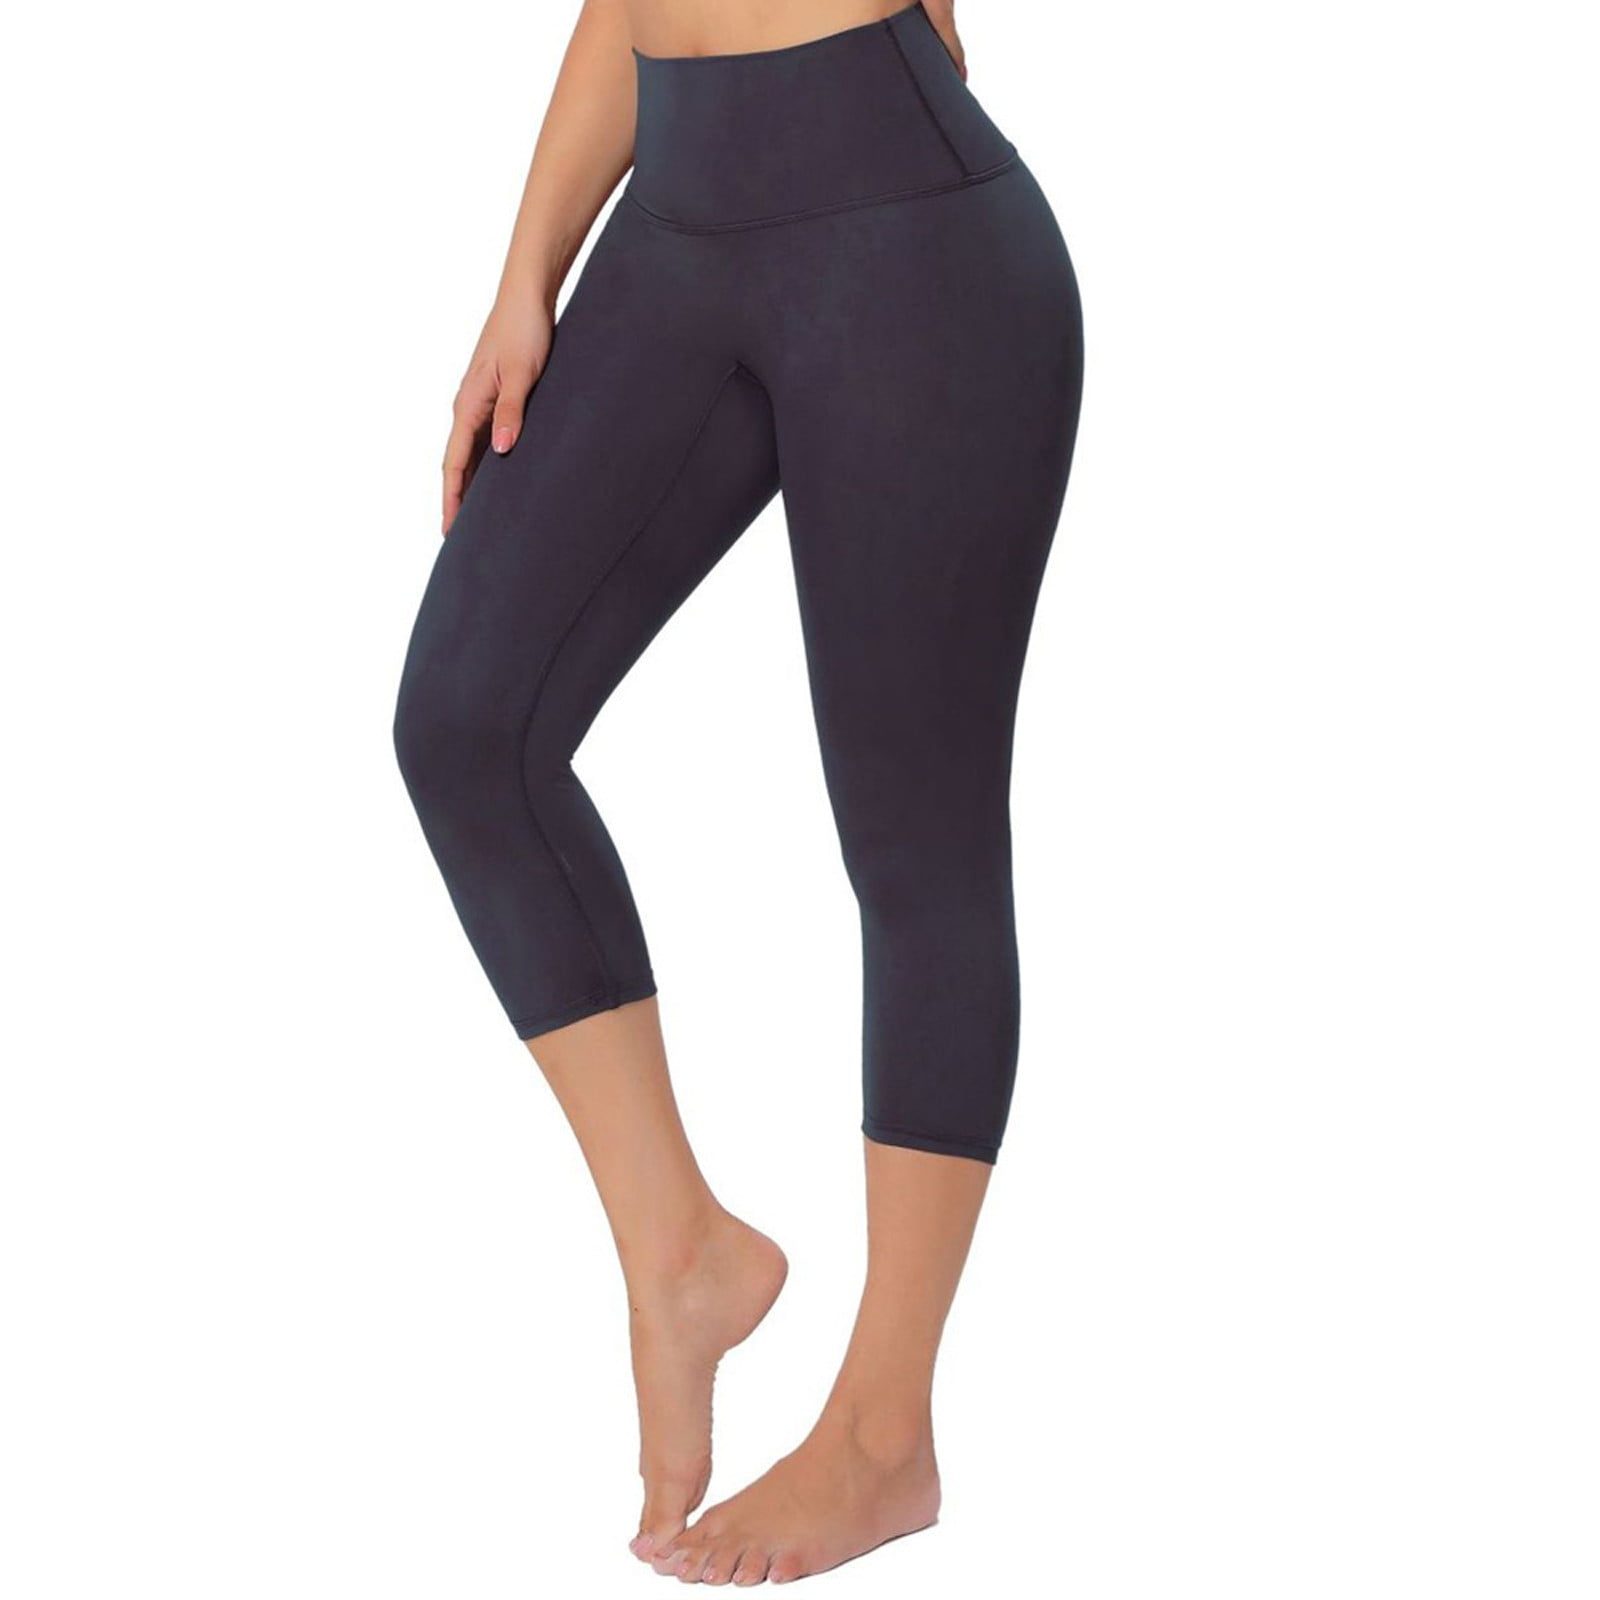 Aayomet Yoga Pants Women's Bootcut Yoga Pants with Pockets, High